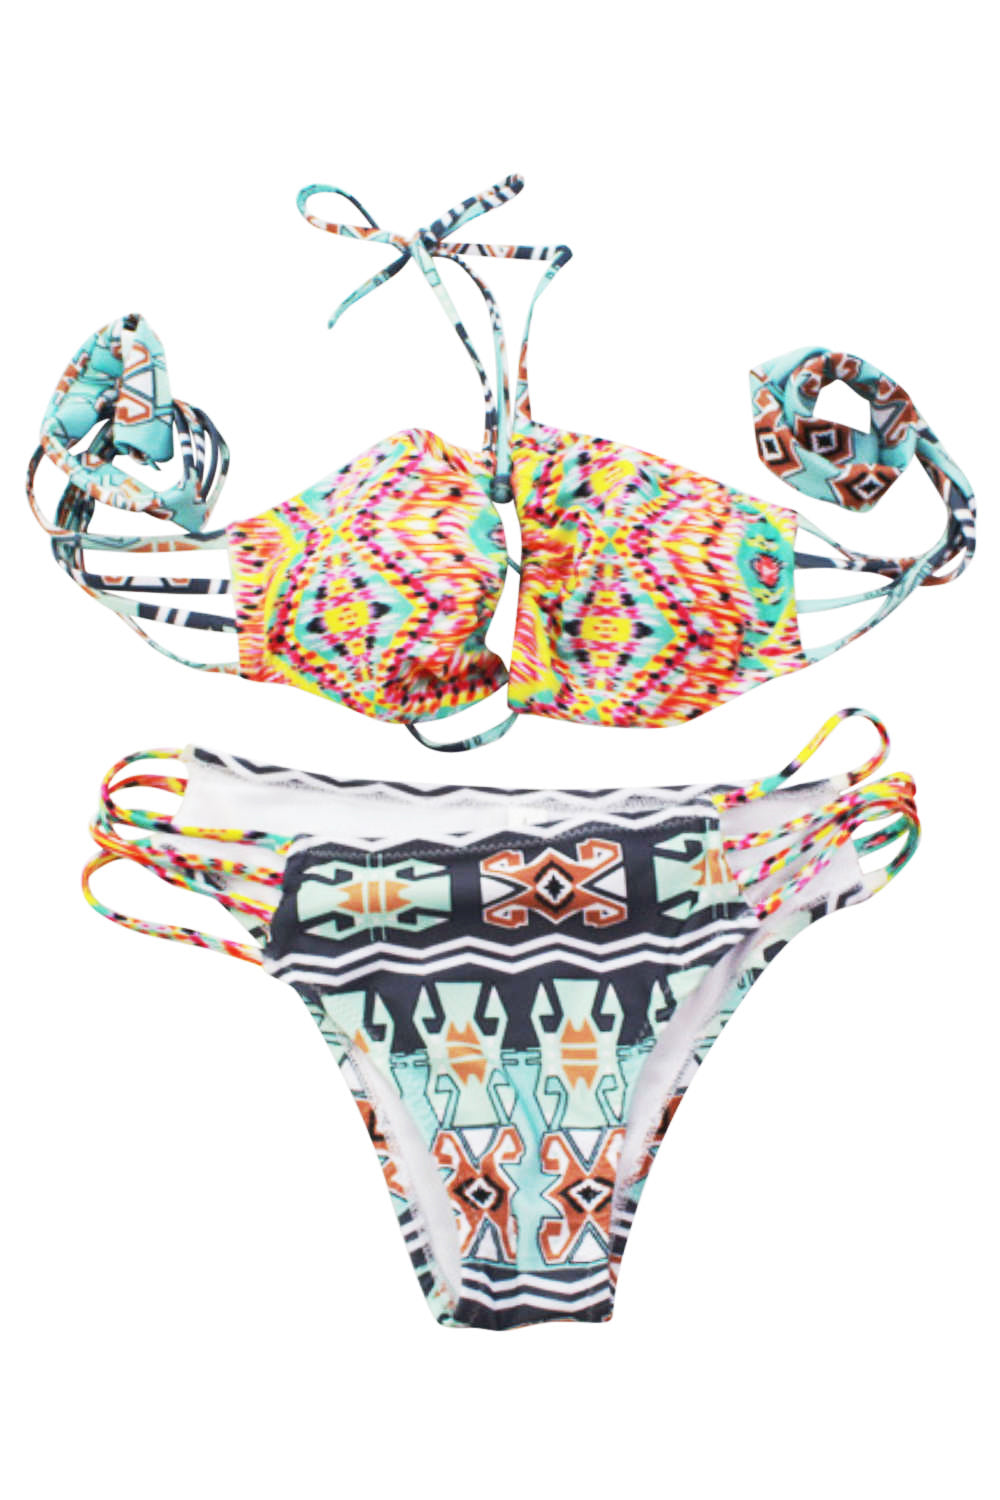 Iyasson Bohemia Print Halter Bikini Sets With Strappy Detailing